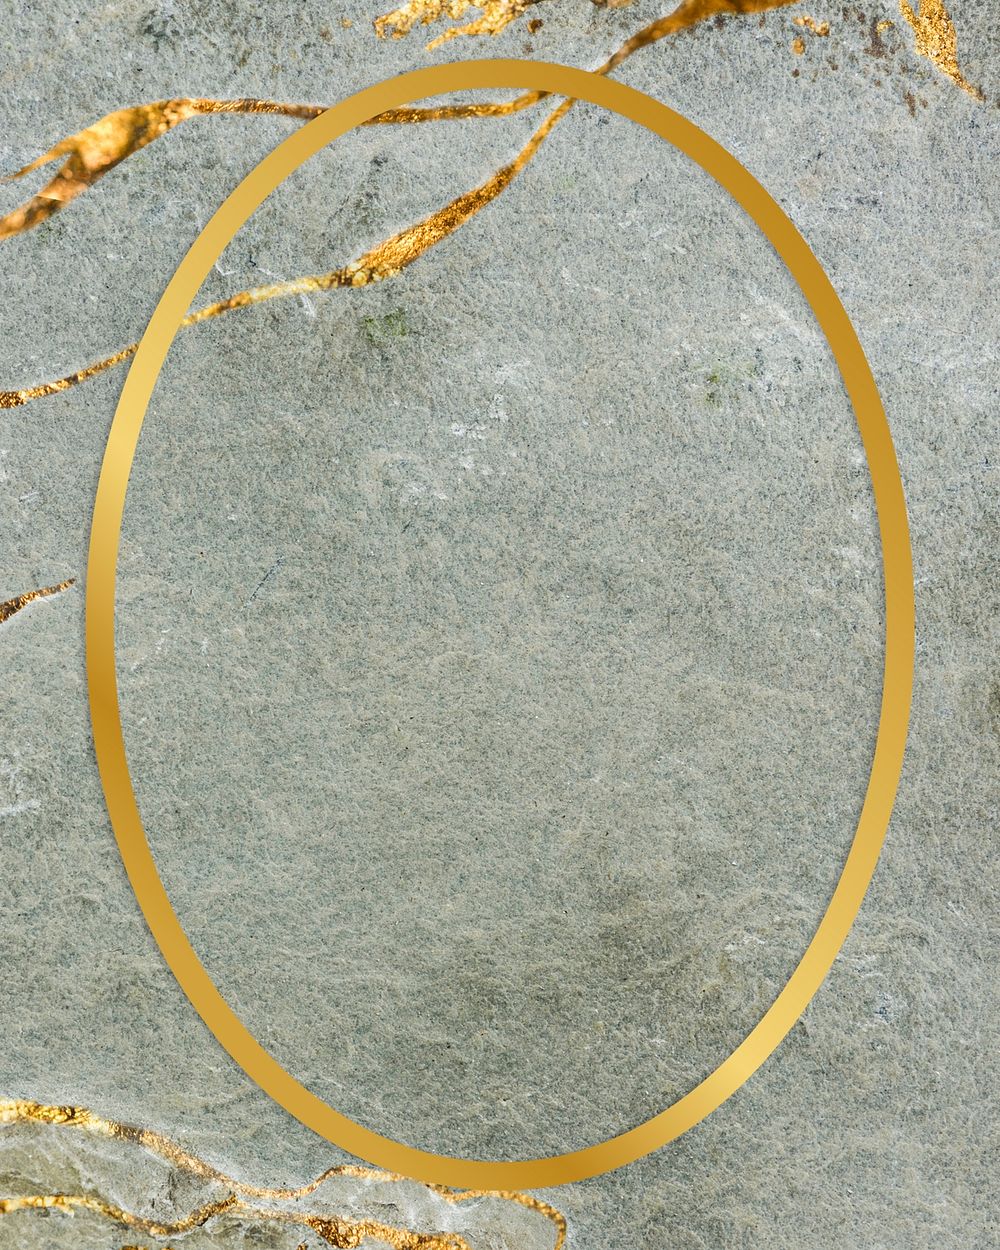 Golden framed oval on a marble textured illustration